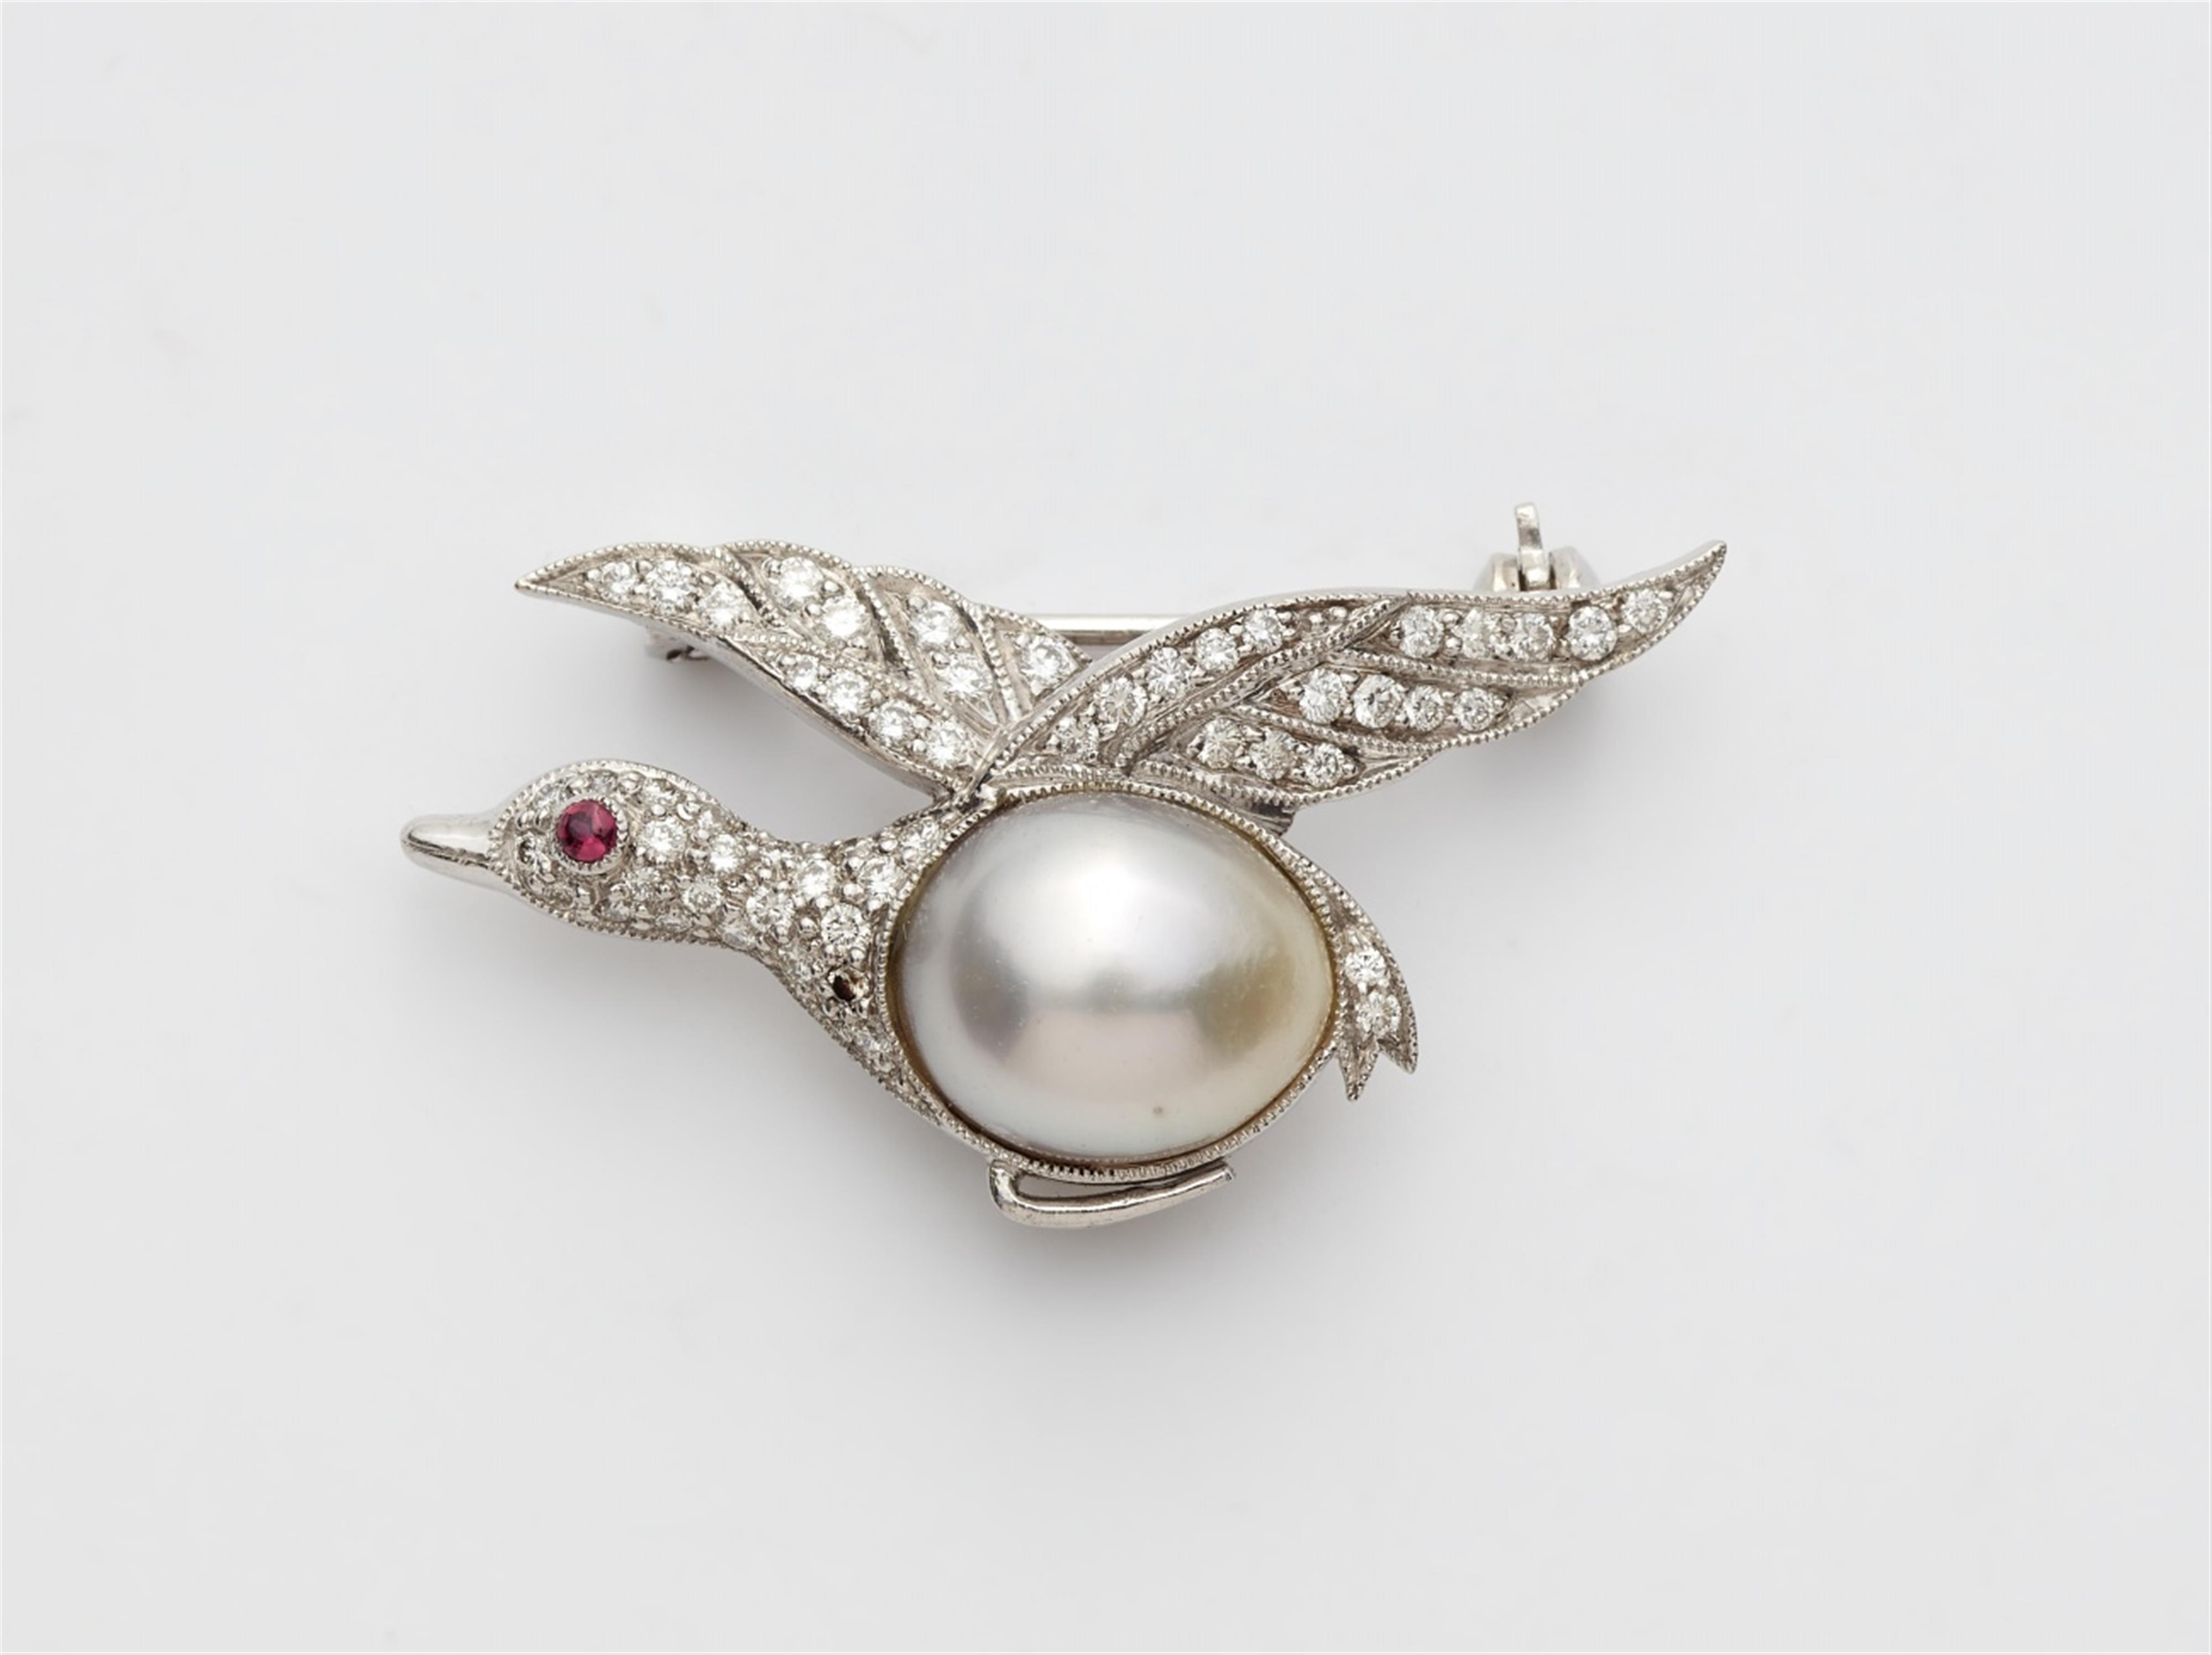 A miniature pearl brooch - image-1